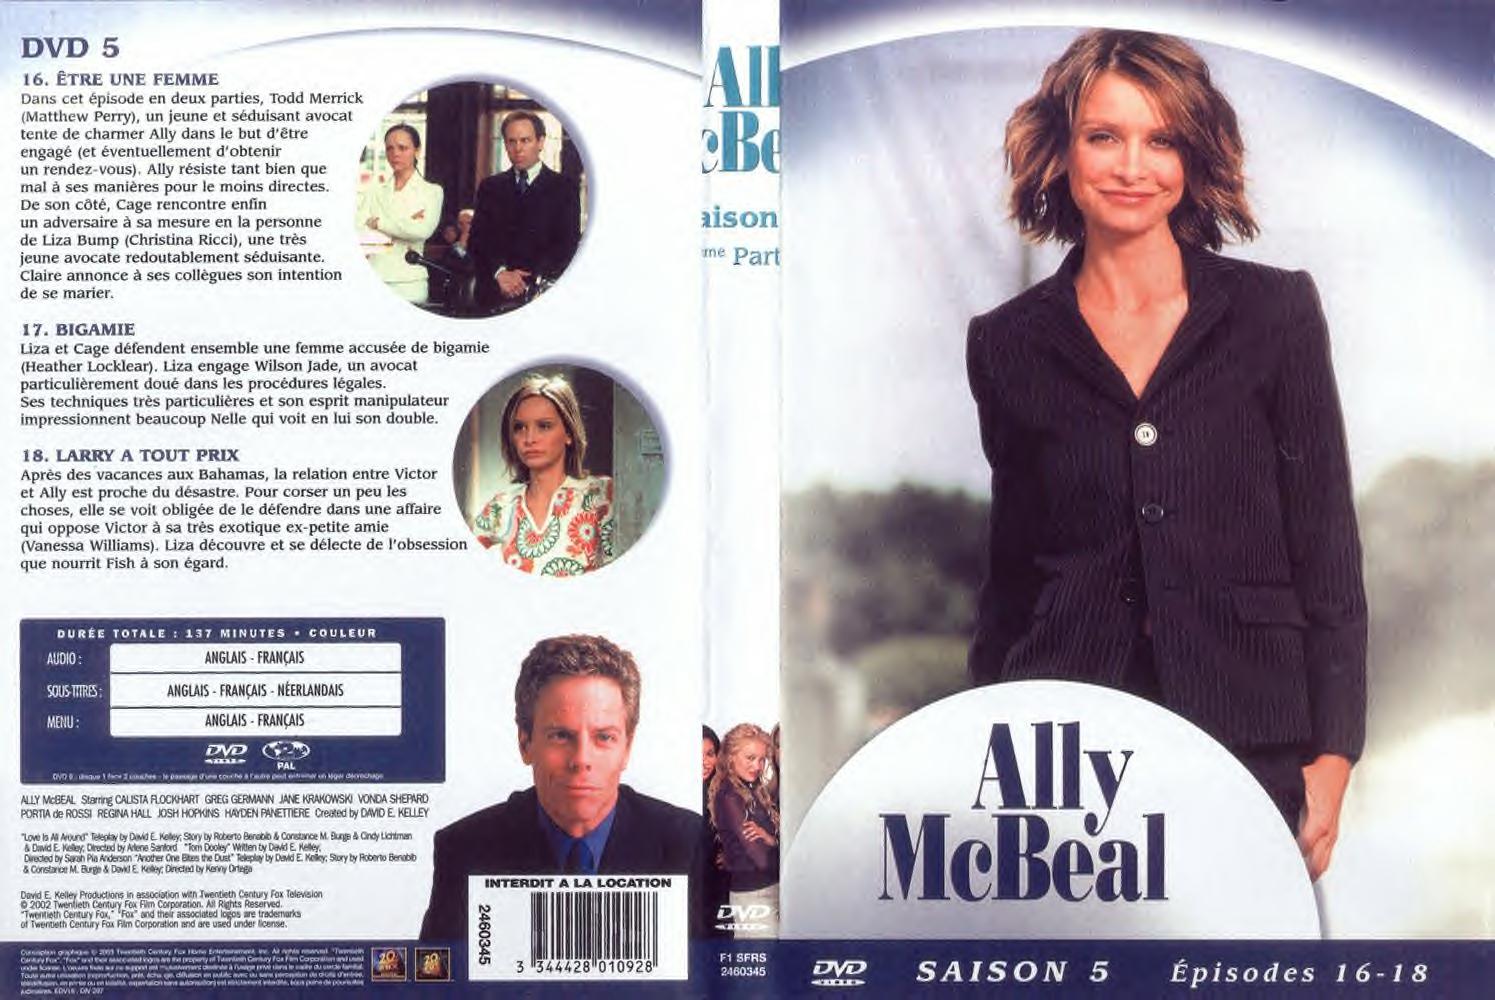 Jaquette DVD Ally McBeal saison 5 dvd 5